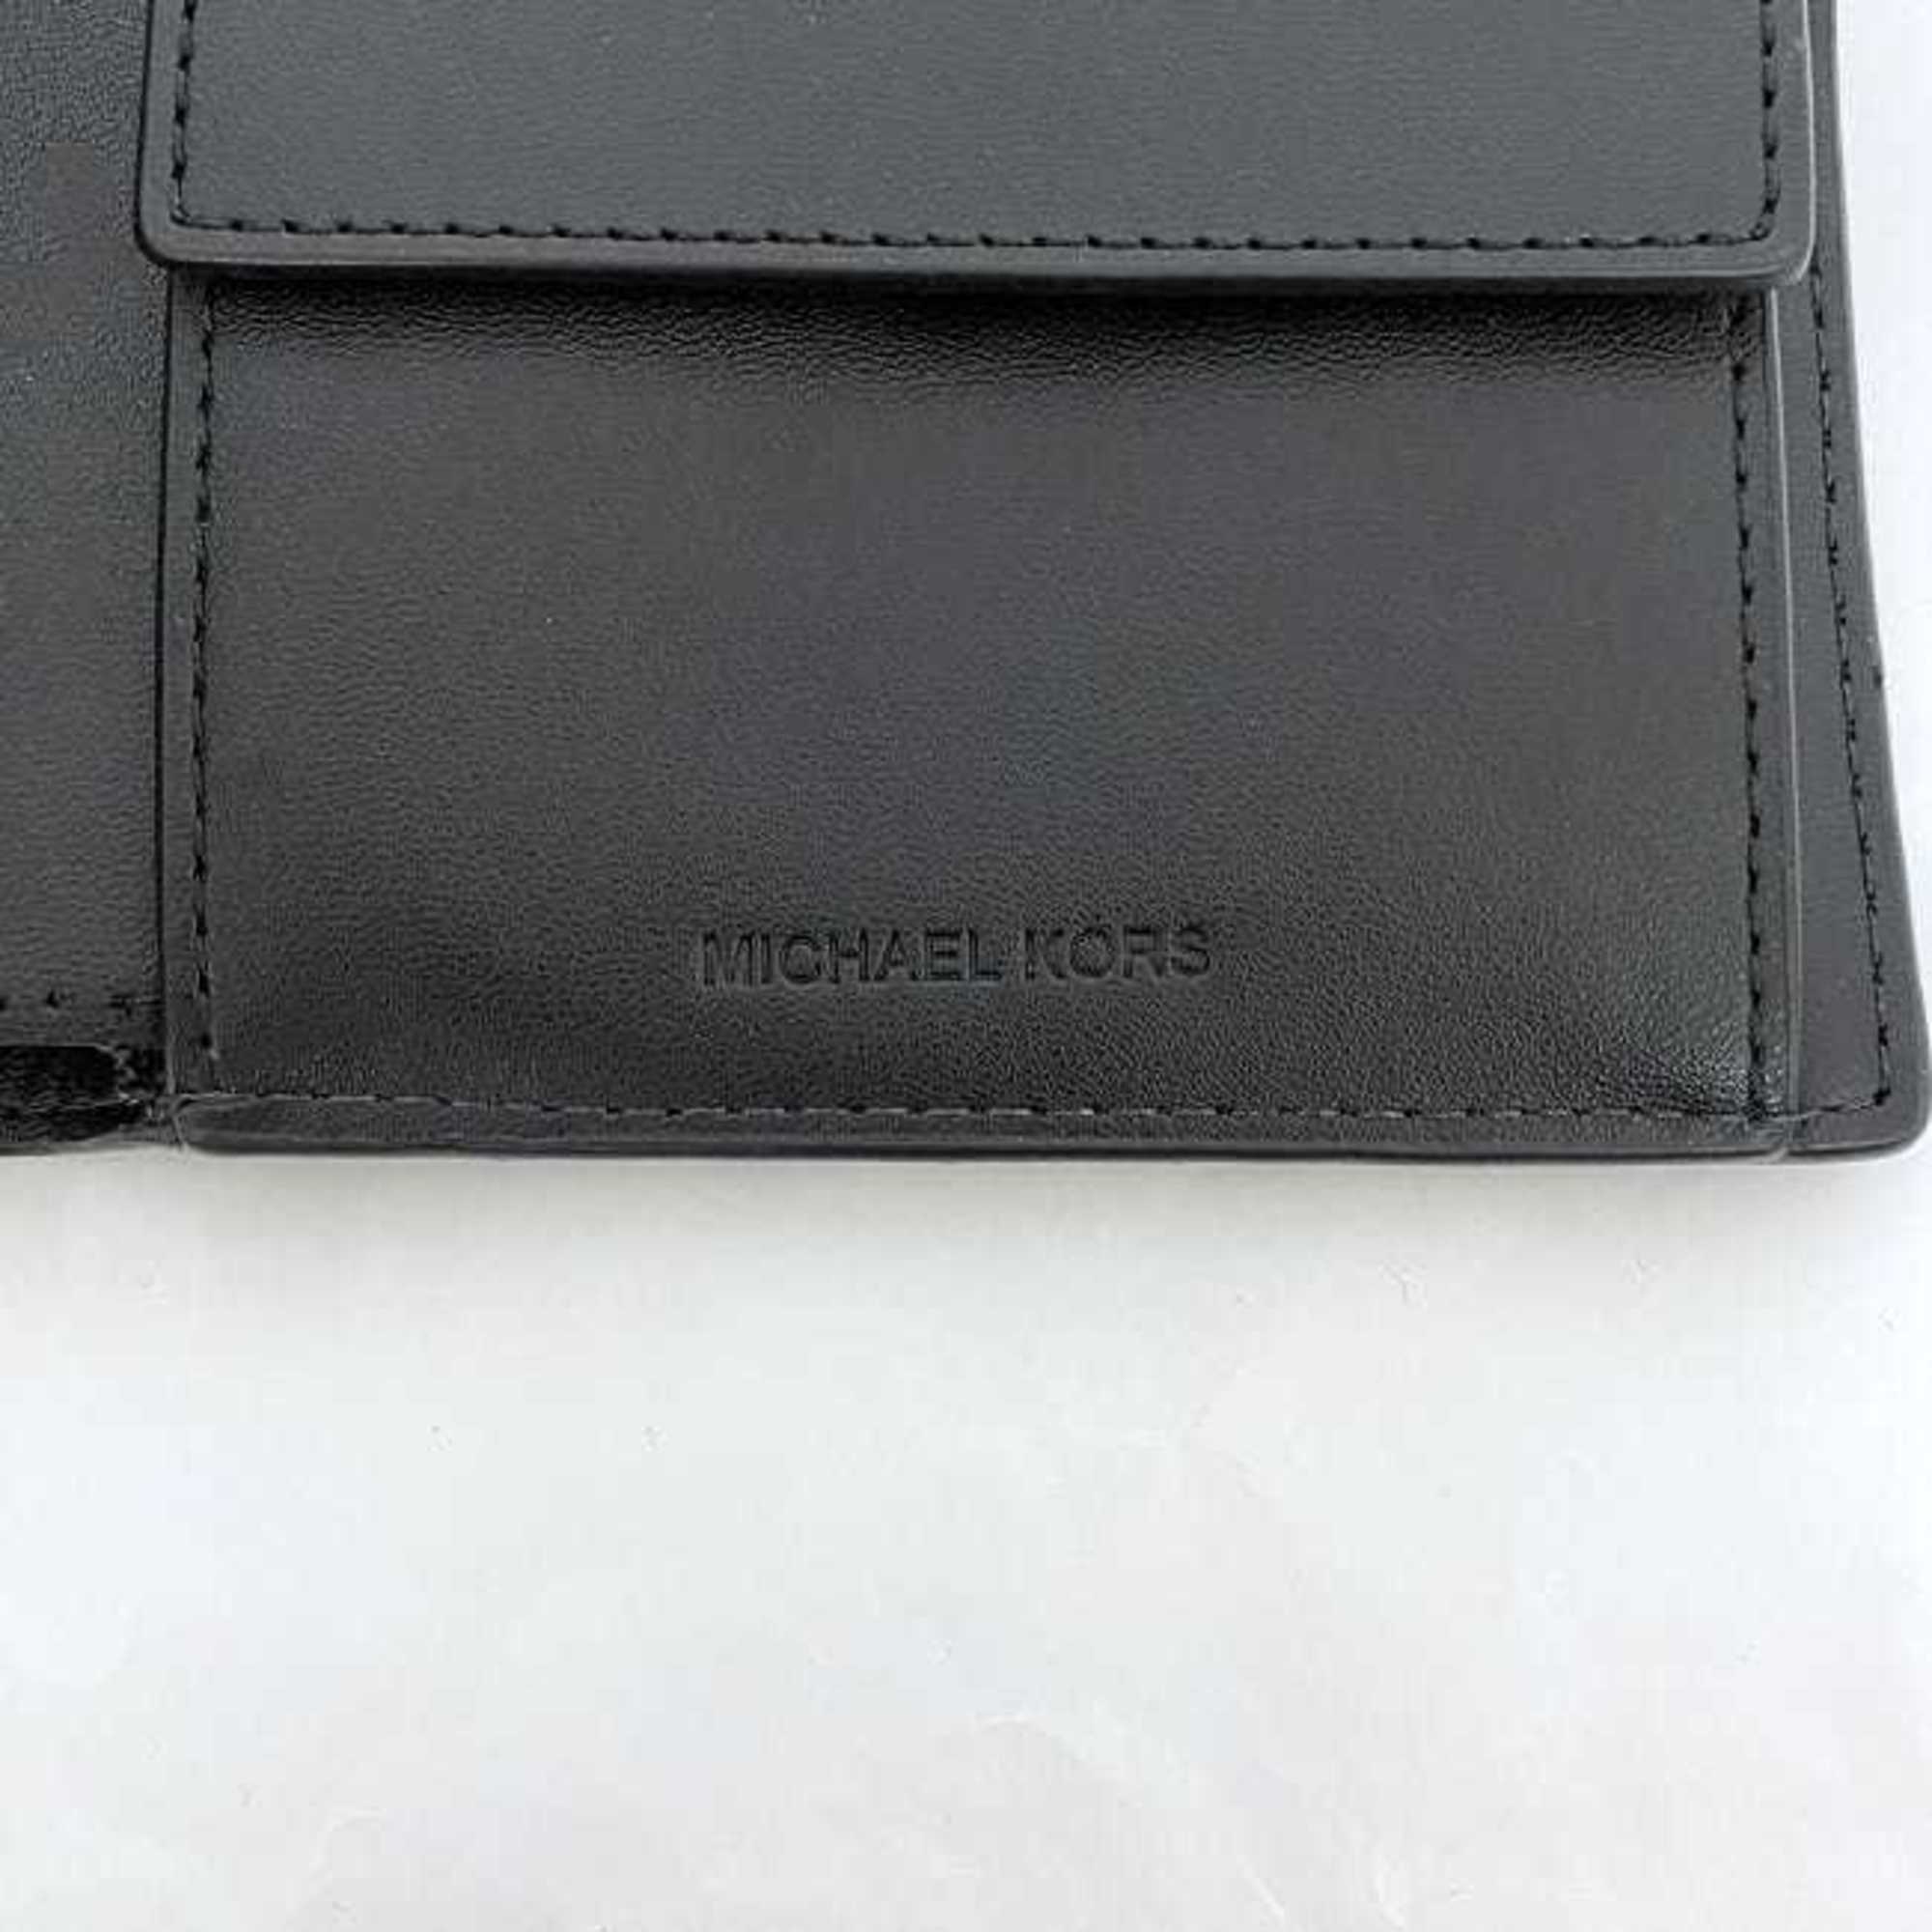 Michael Kors Bifold Wallet Black White Pink 36R3LCOF3U Folding Leather MICHAEL KORS Stripe Patchwork Stitching Ladies Compact